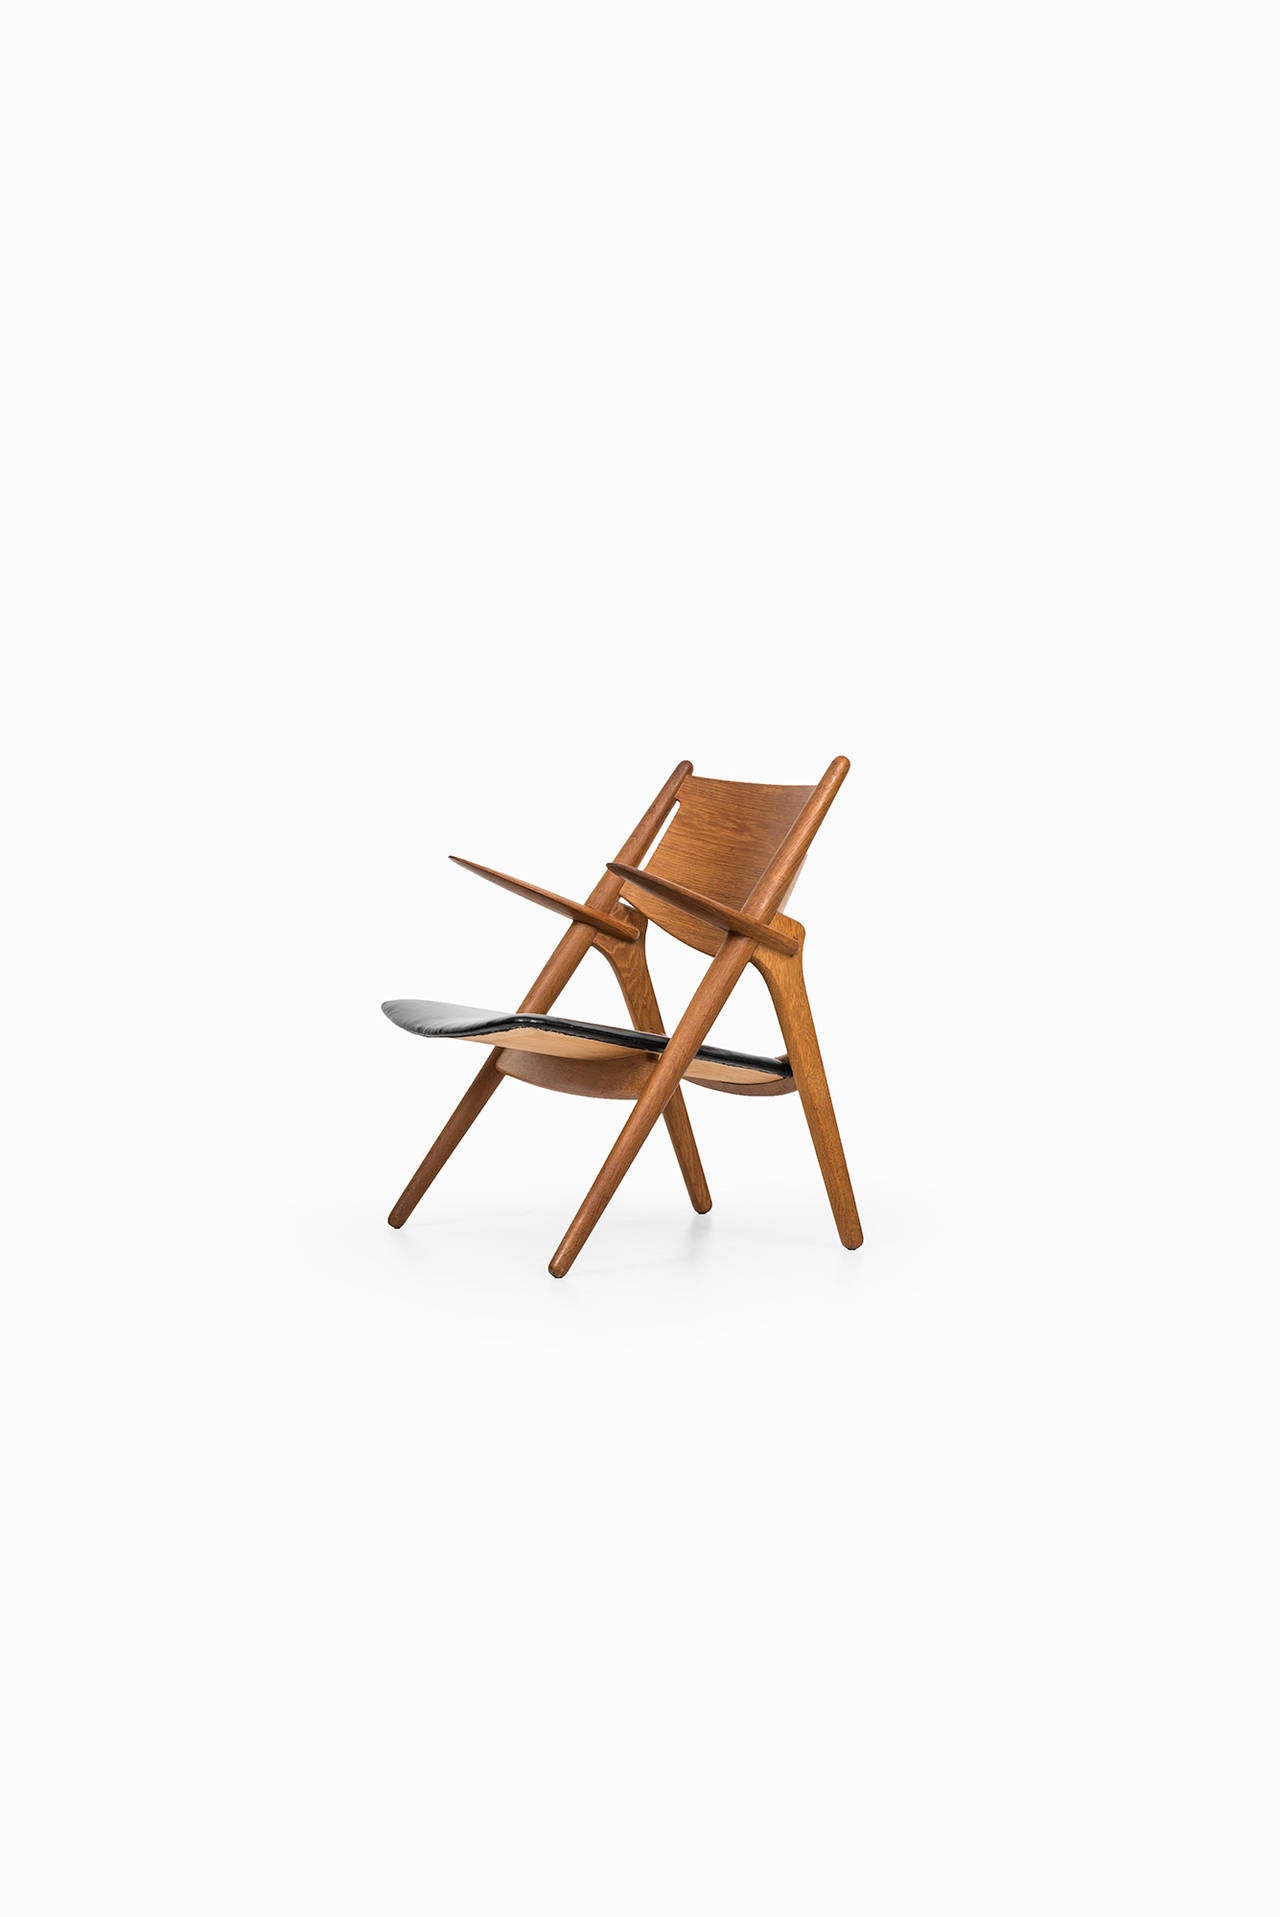 Rare easy chair model CH-28 designed by Hans Wegner. Produced by Carl Hansen & Søn in Denmark